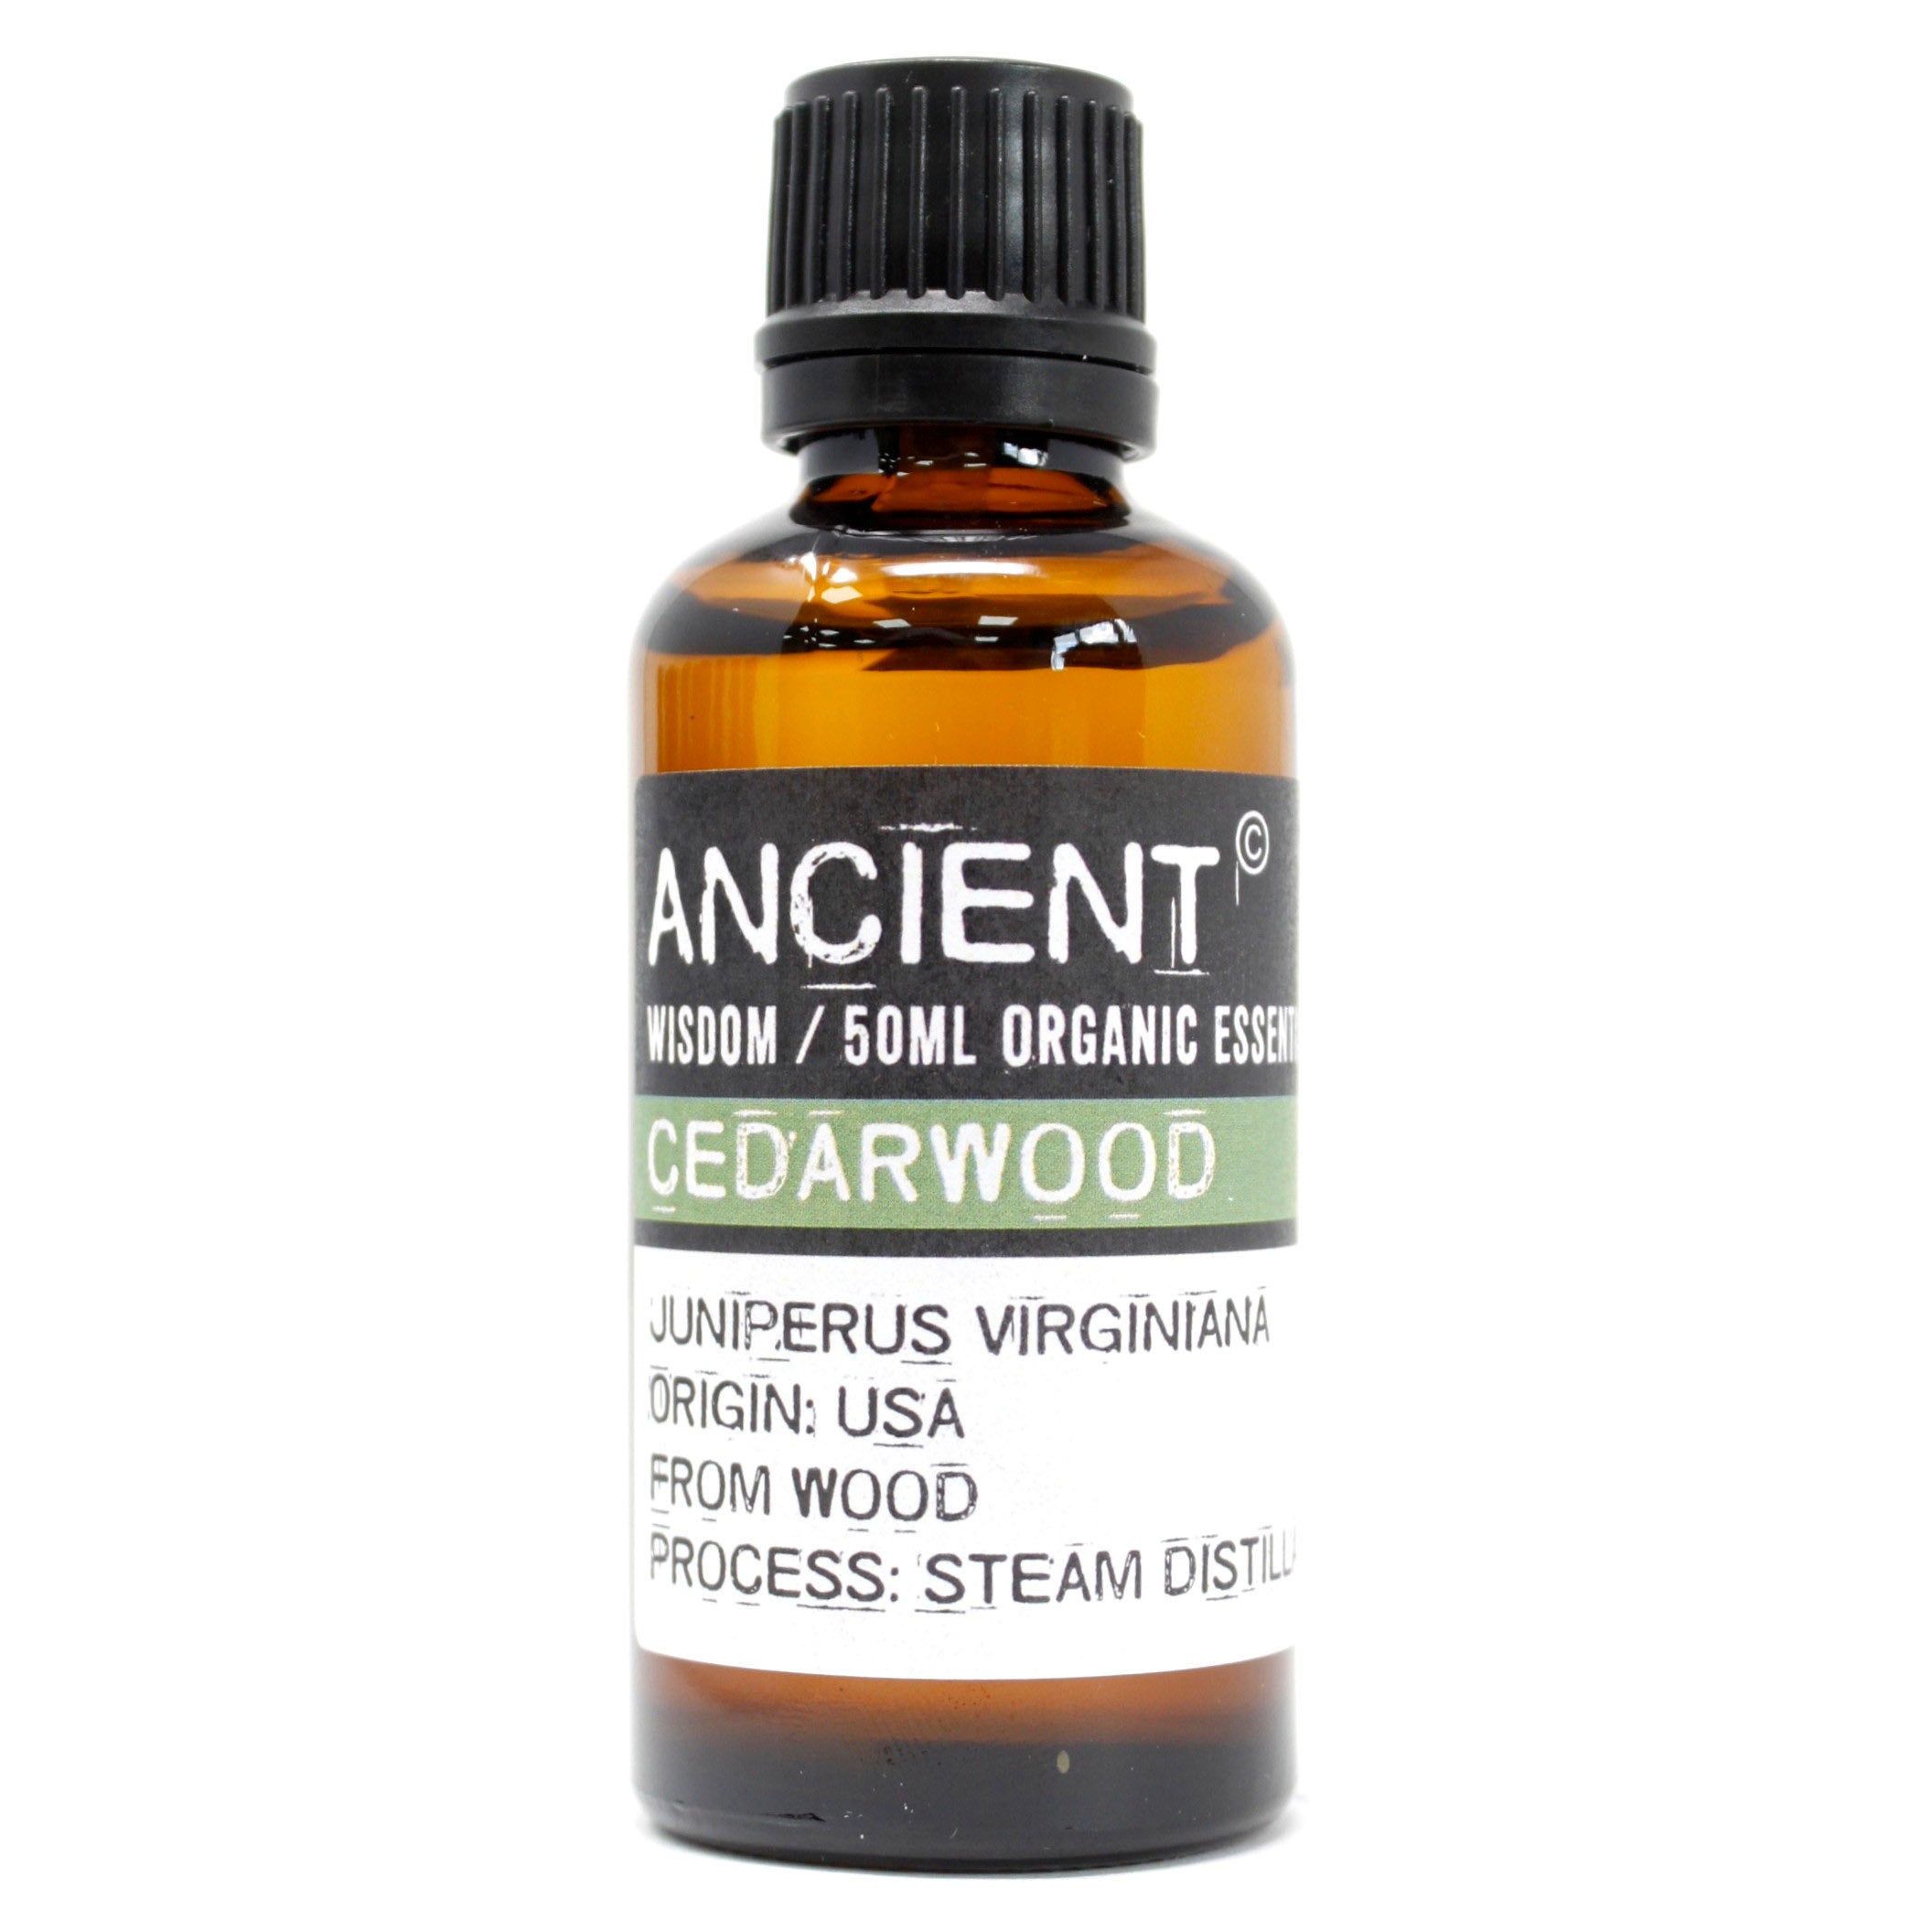 View Cedarwood Organic Essential Oil 50ml information